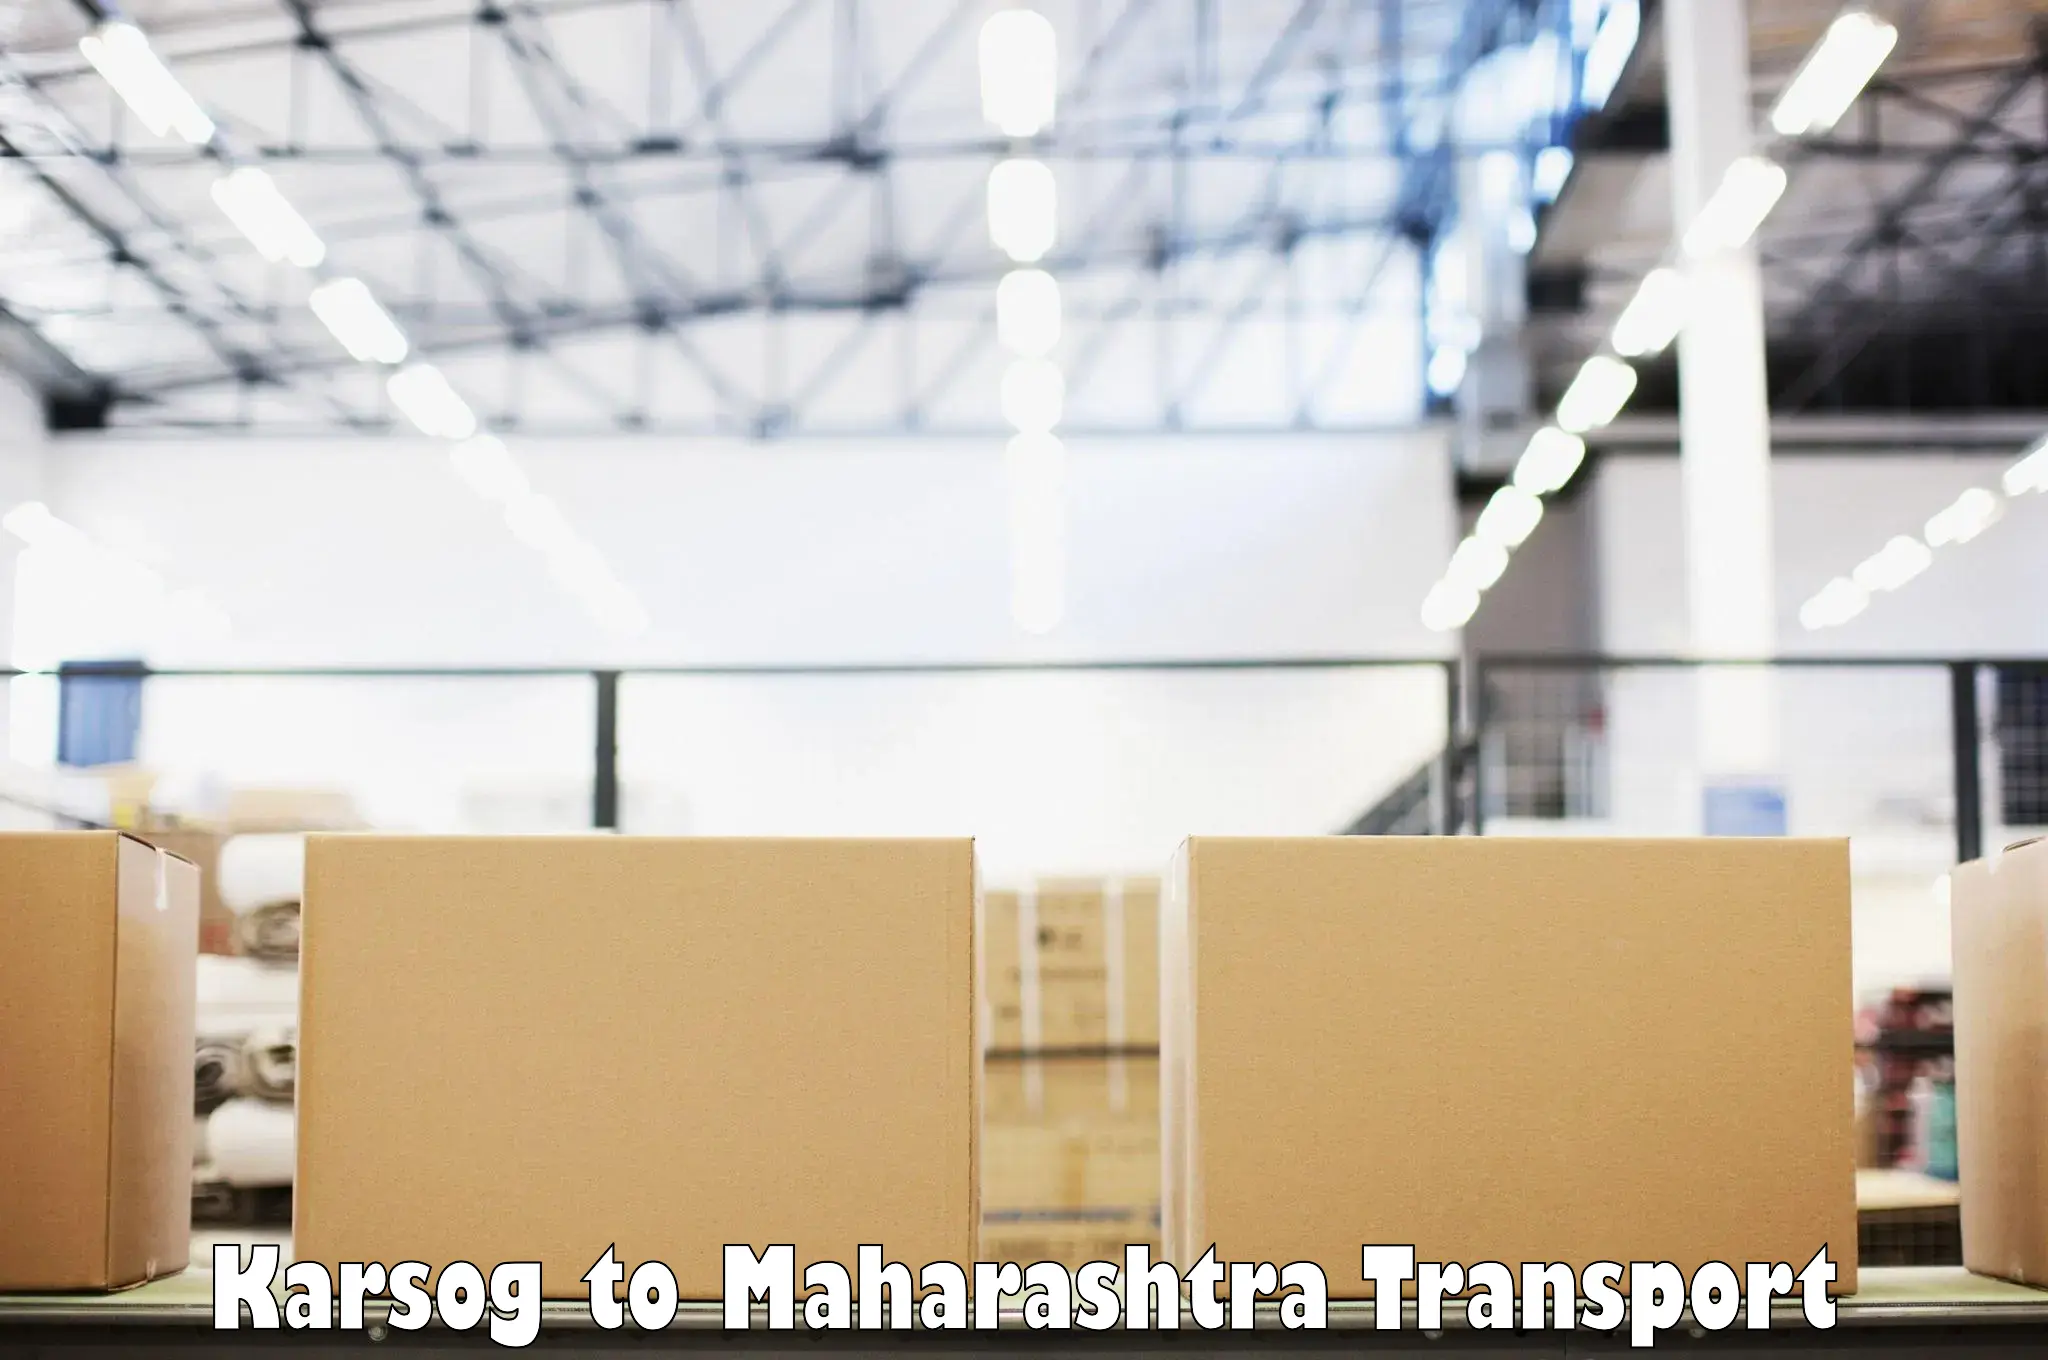 Container transport service Karsog to Kolhapur